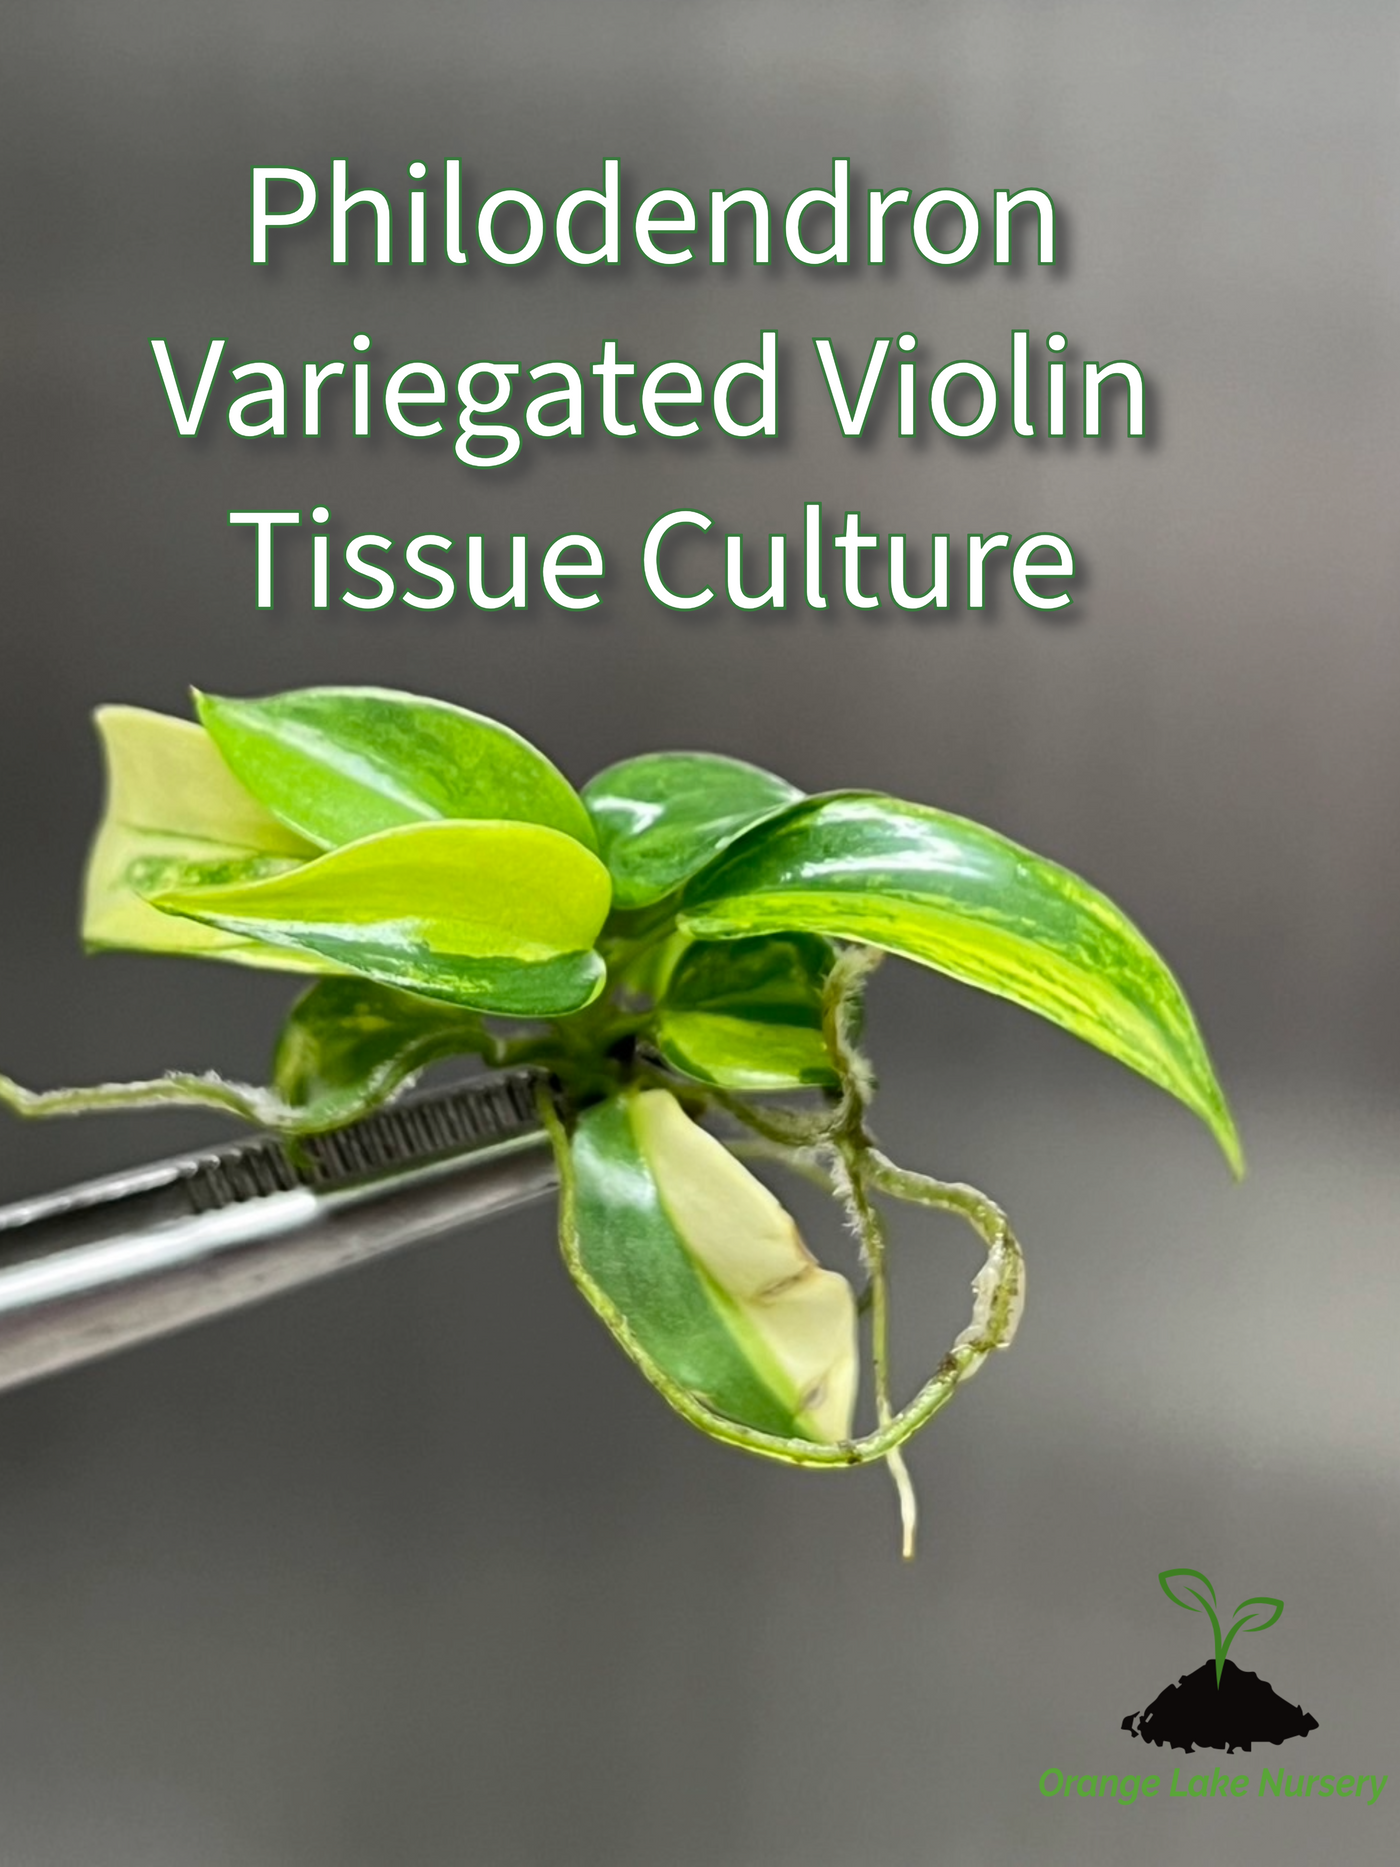 Philodendron (Bipennifolium) Violin Variegated Plantlets (1)